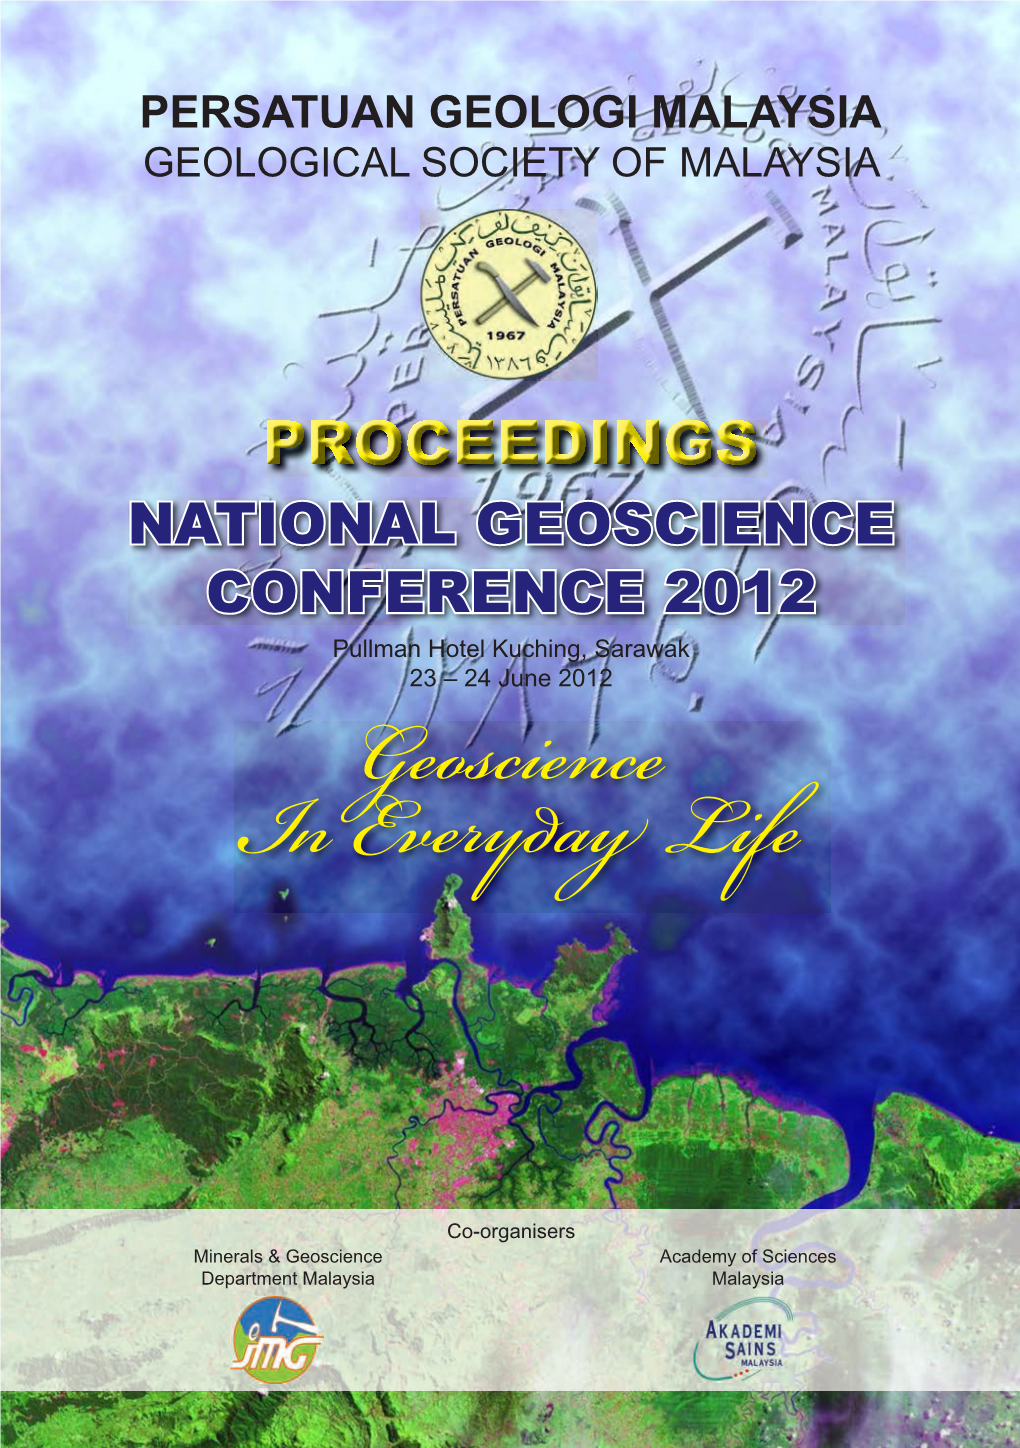 PROCEEDINGS NATIONAL GEOSCIENCE CONFERENCE 2012 Pullman Hotel Kuching, Sarawak 23 – 24 June 2012 Geoscience I Every Life